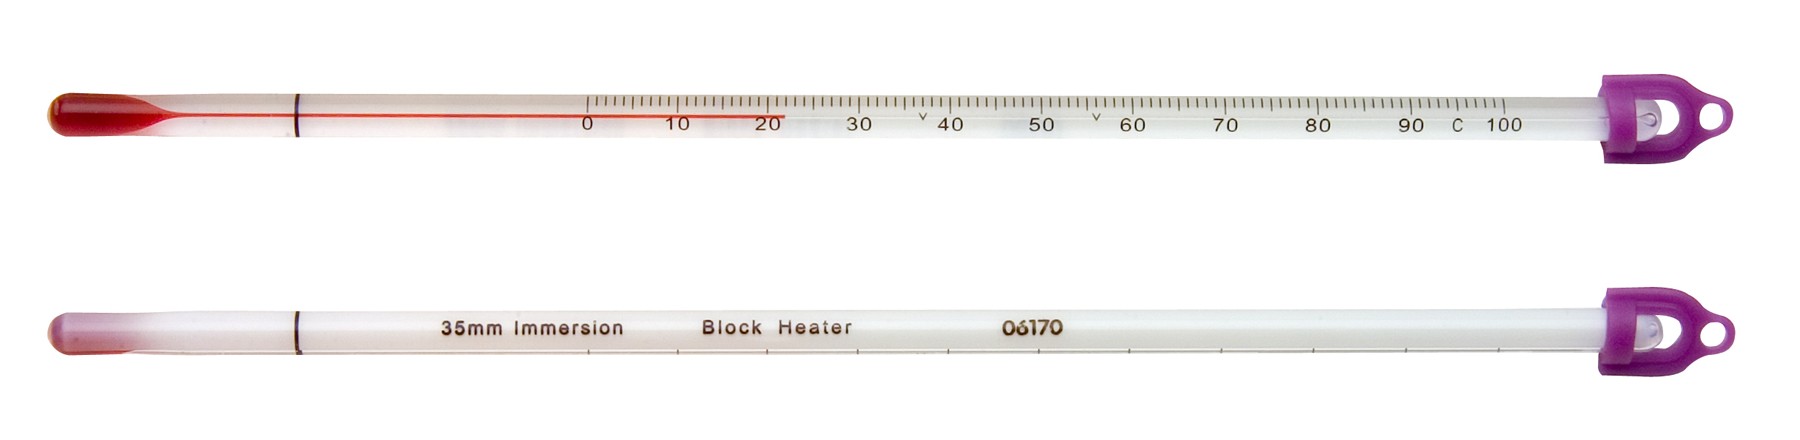 SP Bel-Art, H-B DURAC Dry Block/Incubator Liquid-In-Glass Thermometer; 0 to 80C, 100mm Immersion, Organic Liquid Fill